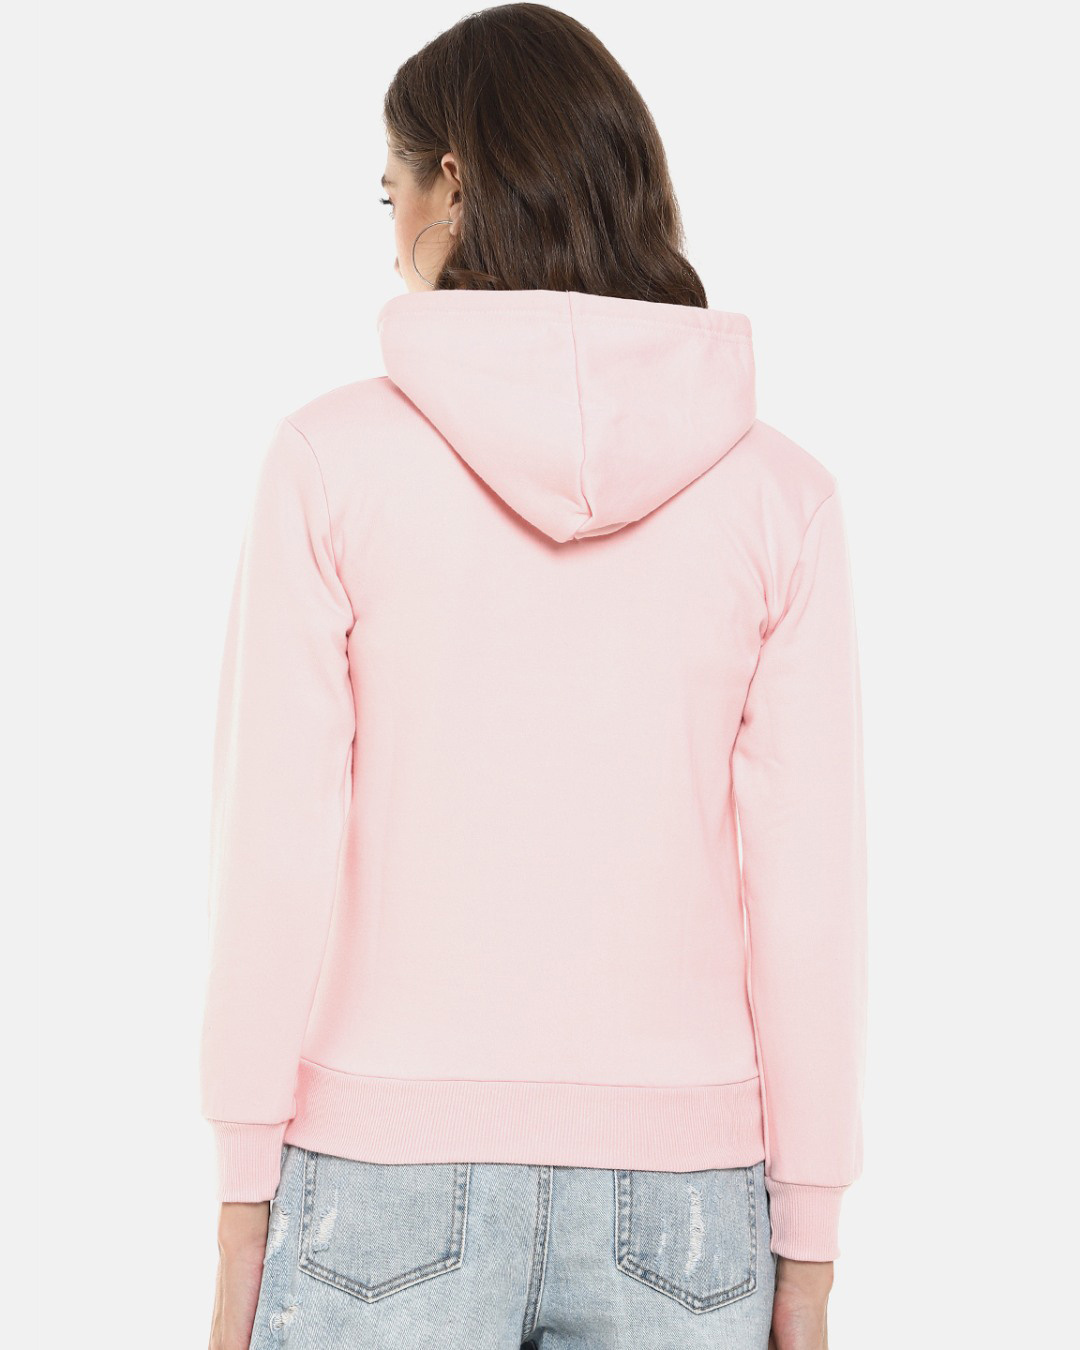 Shop Women's Pink Solid Stylish Casual Hooded Sweatshirt-Back